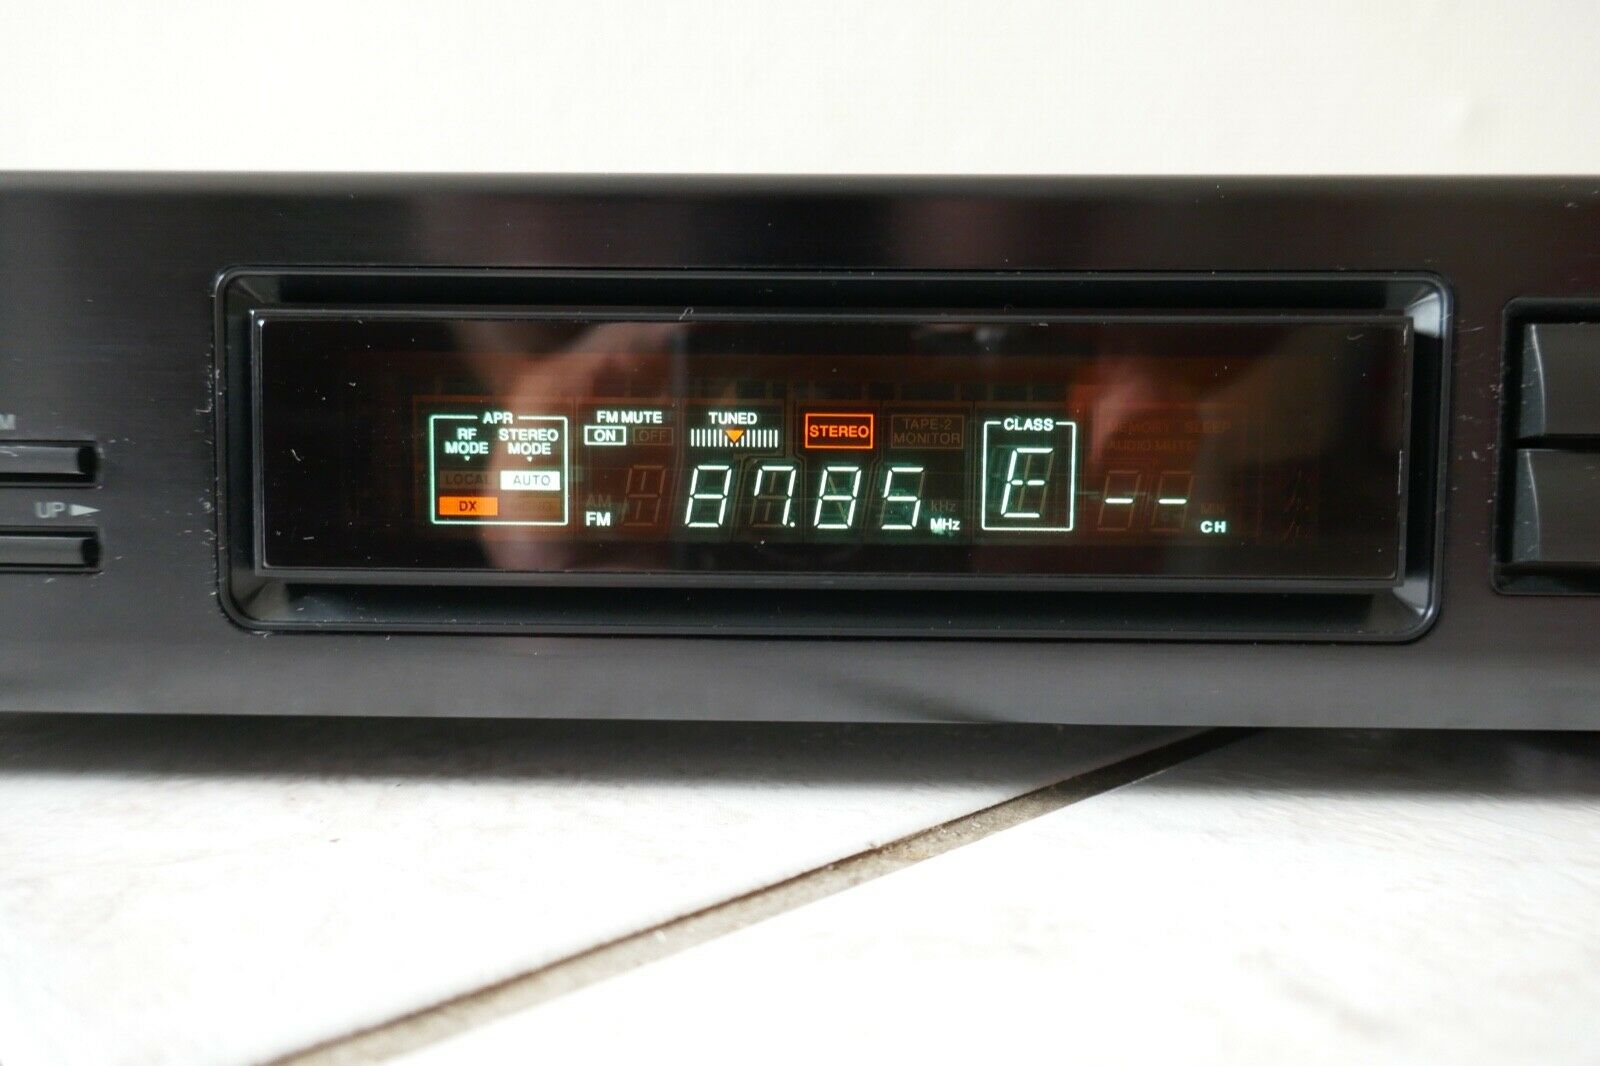 tuner radio onkyo T-401 vintage occasion